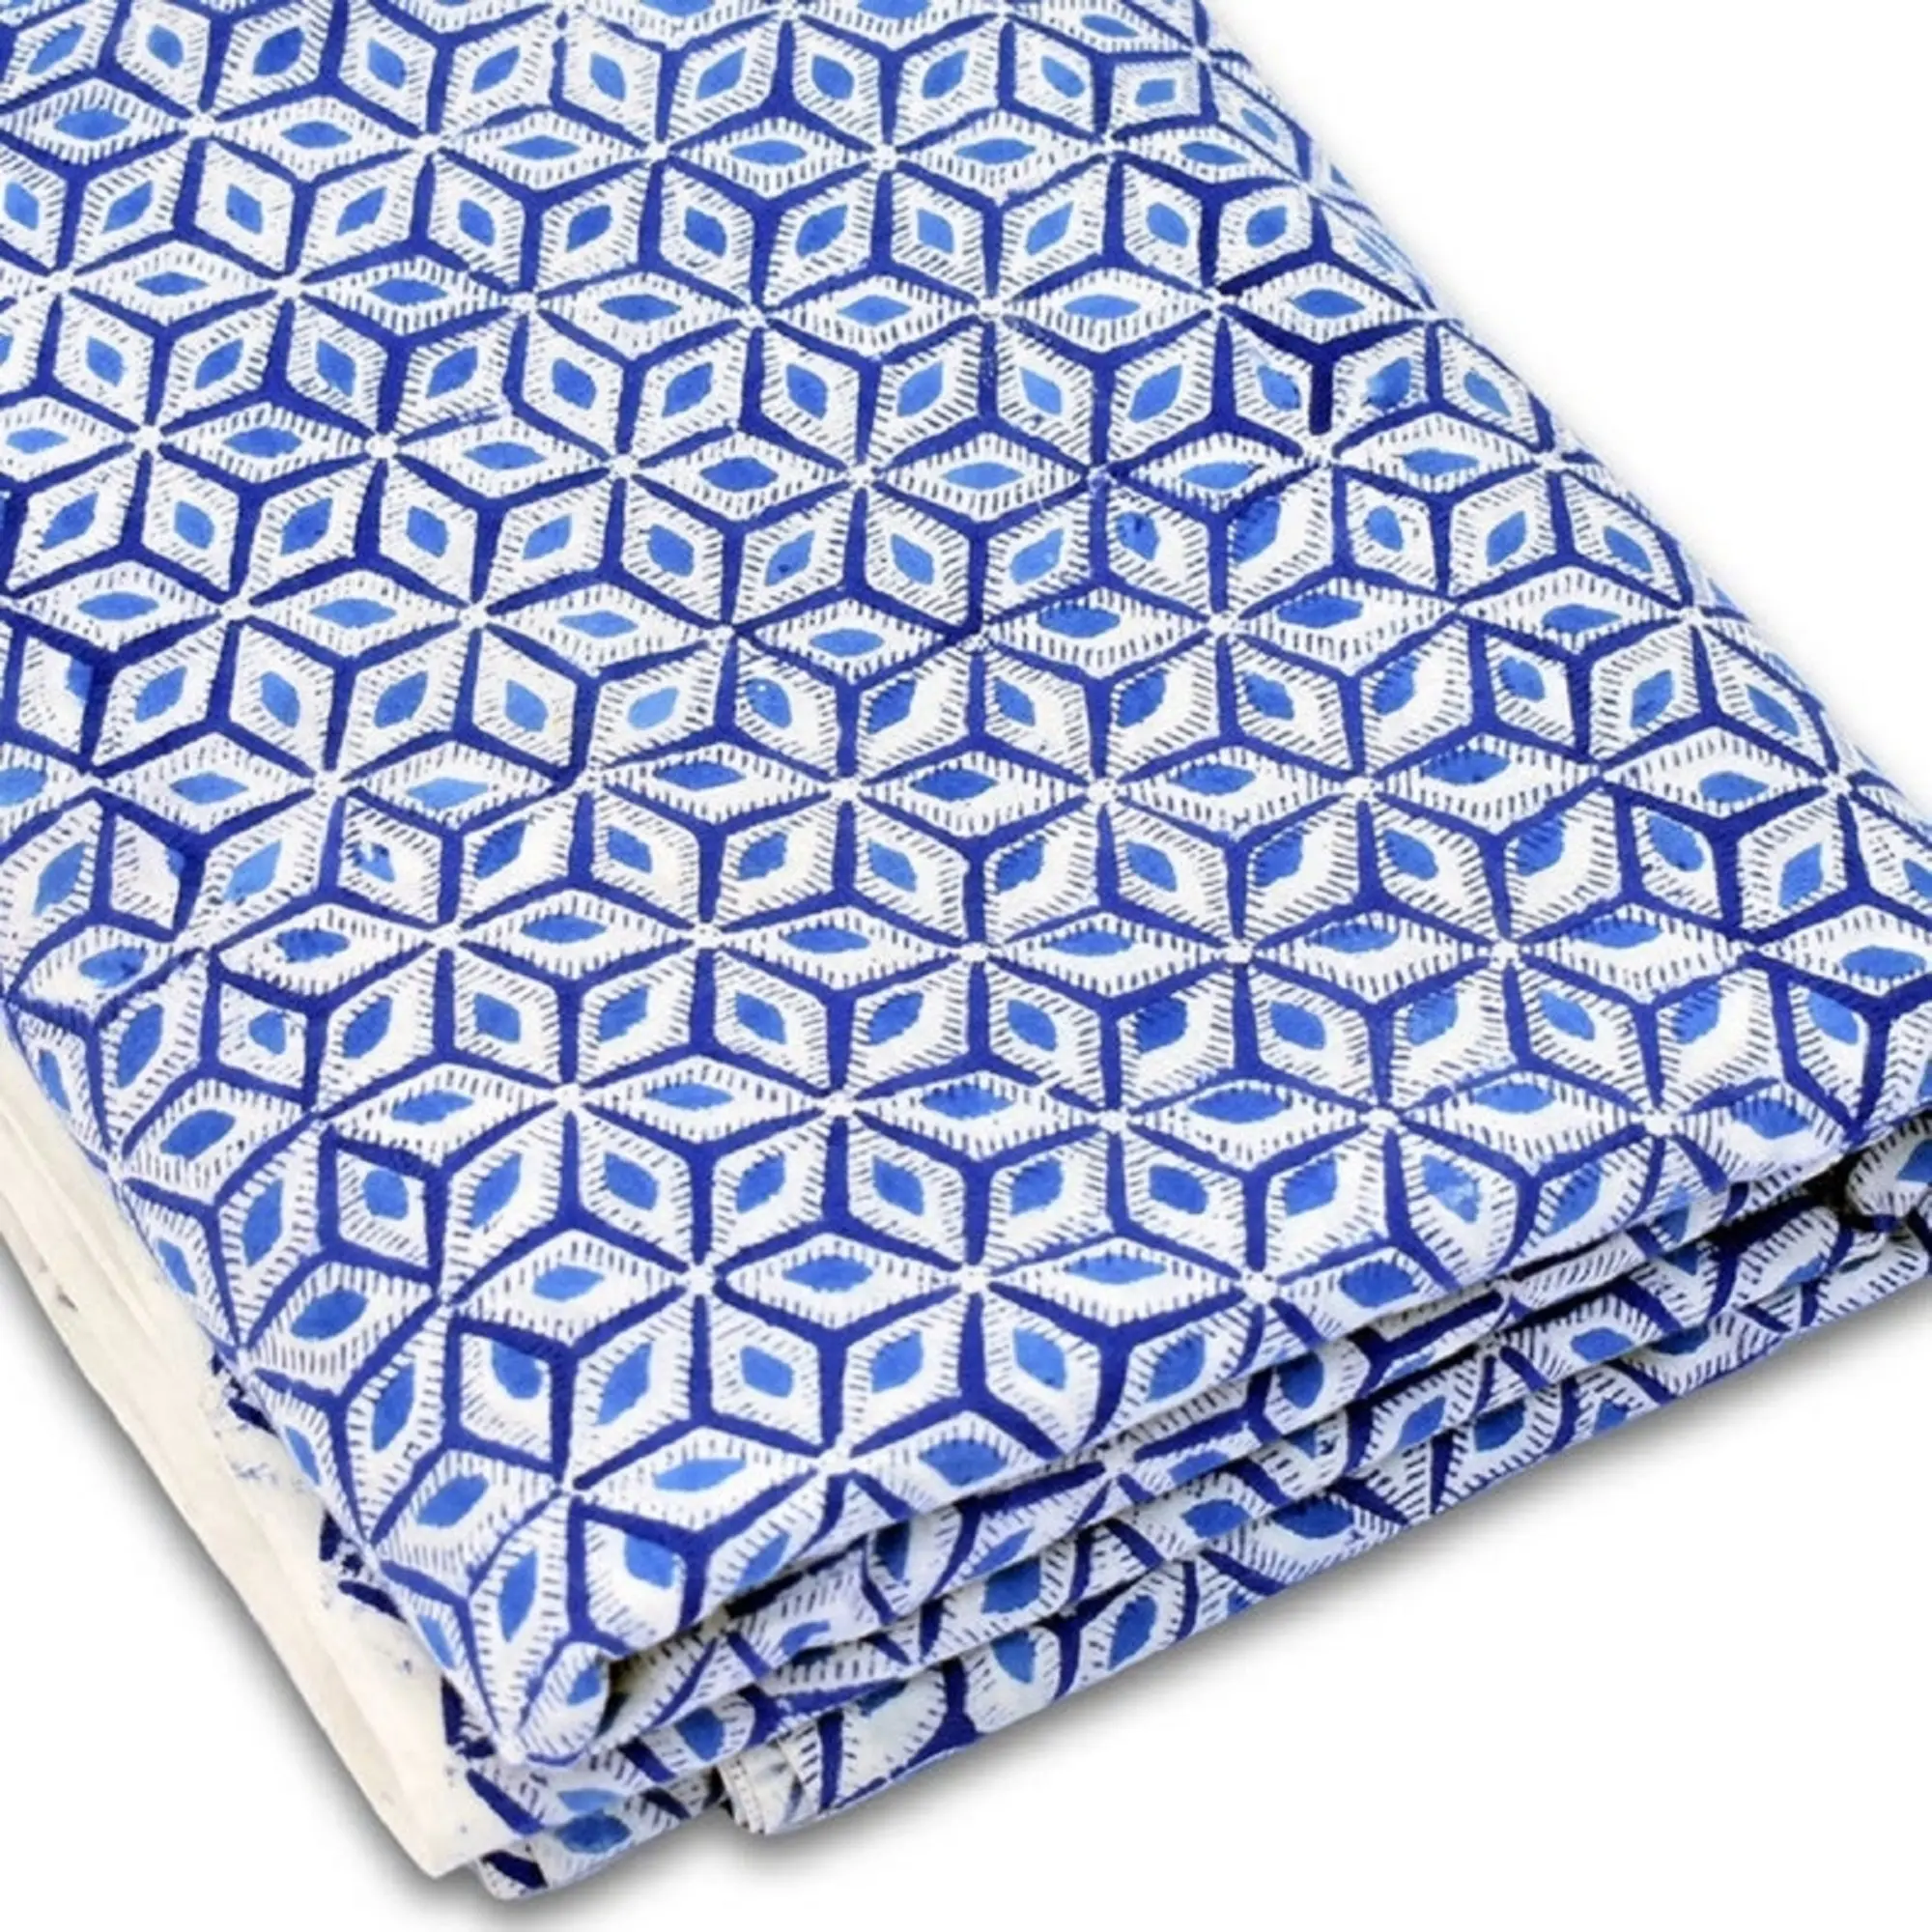 Warna biru geometris dicetak buatan tangan blok dicetak kain 100% katun organik Vintage kain jahit pakaian membuat Gaun